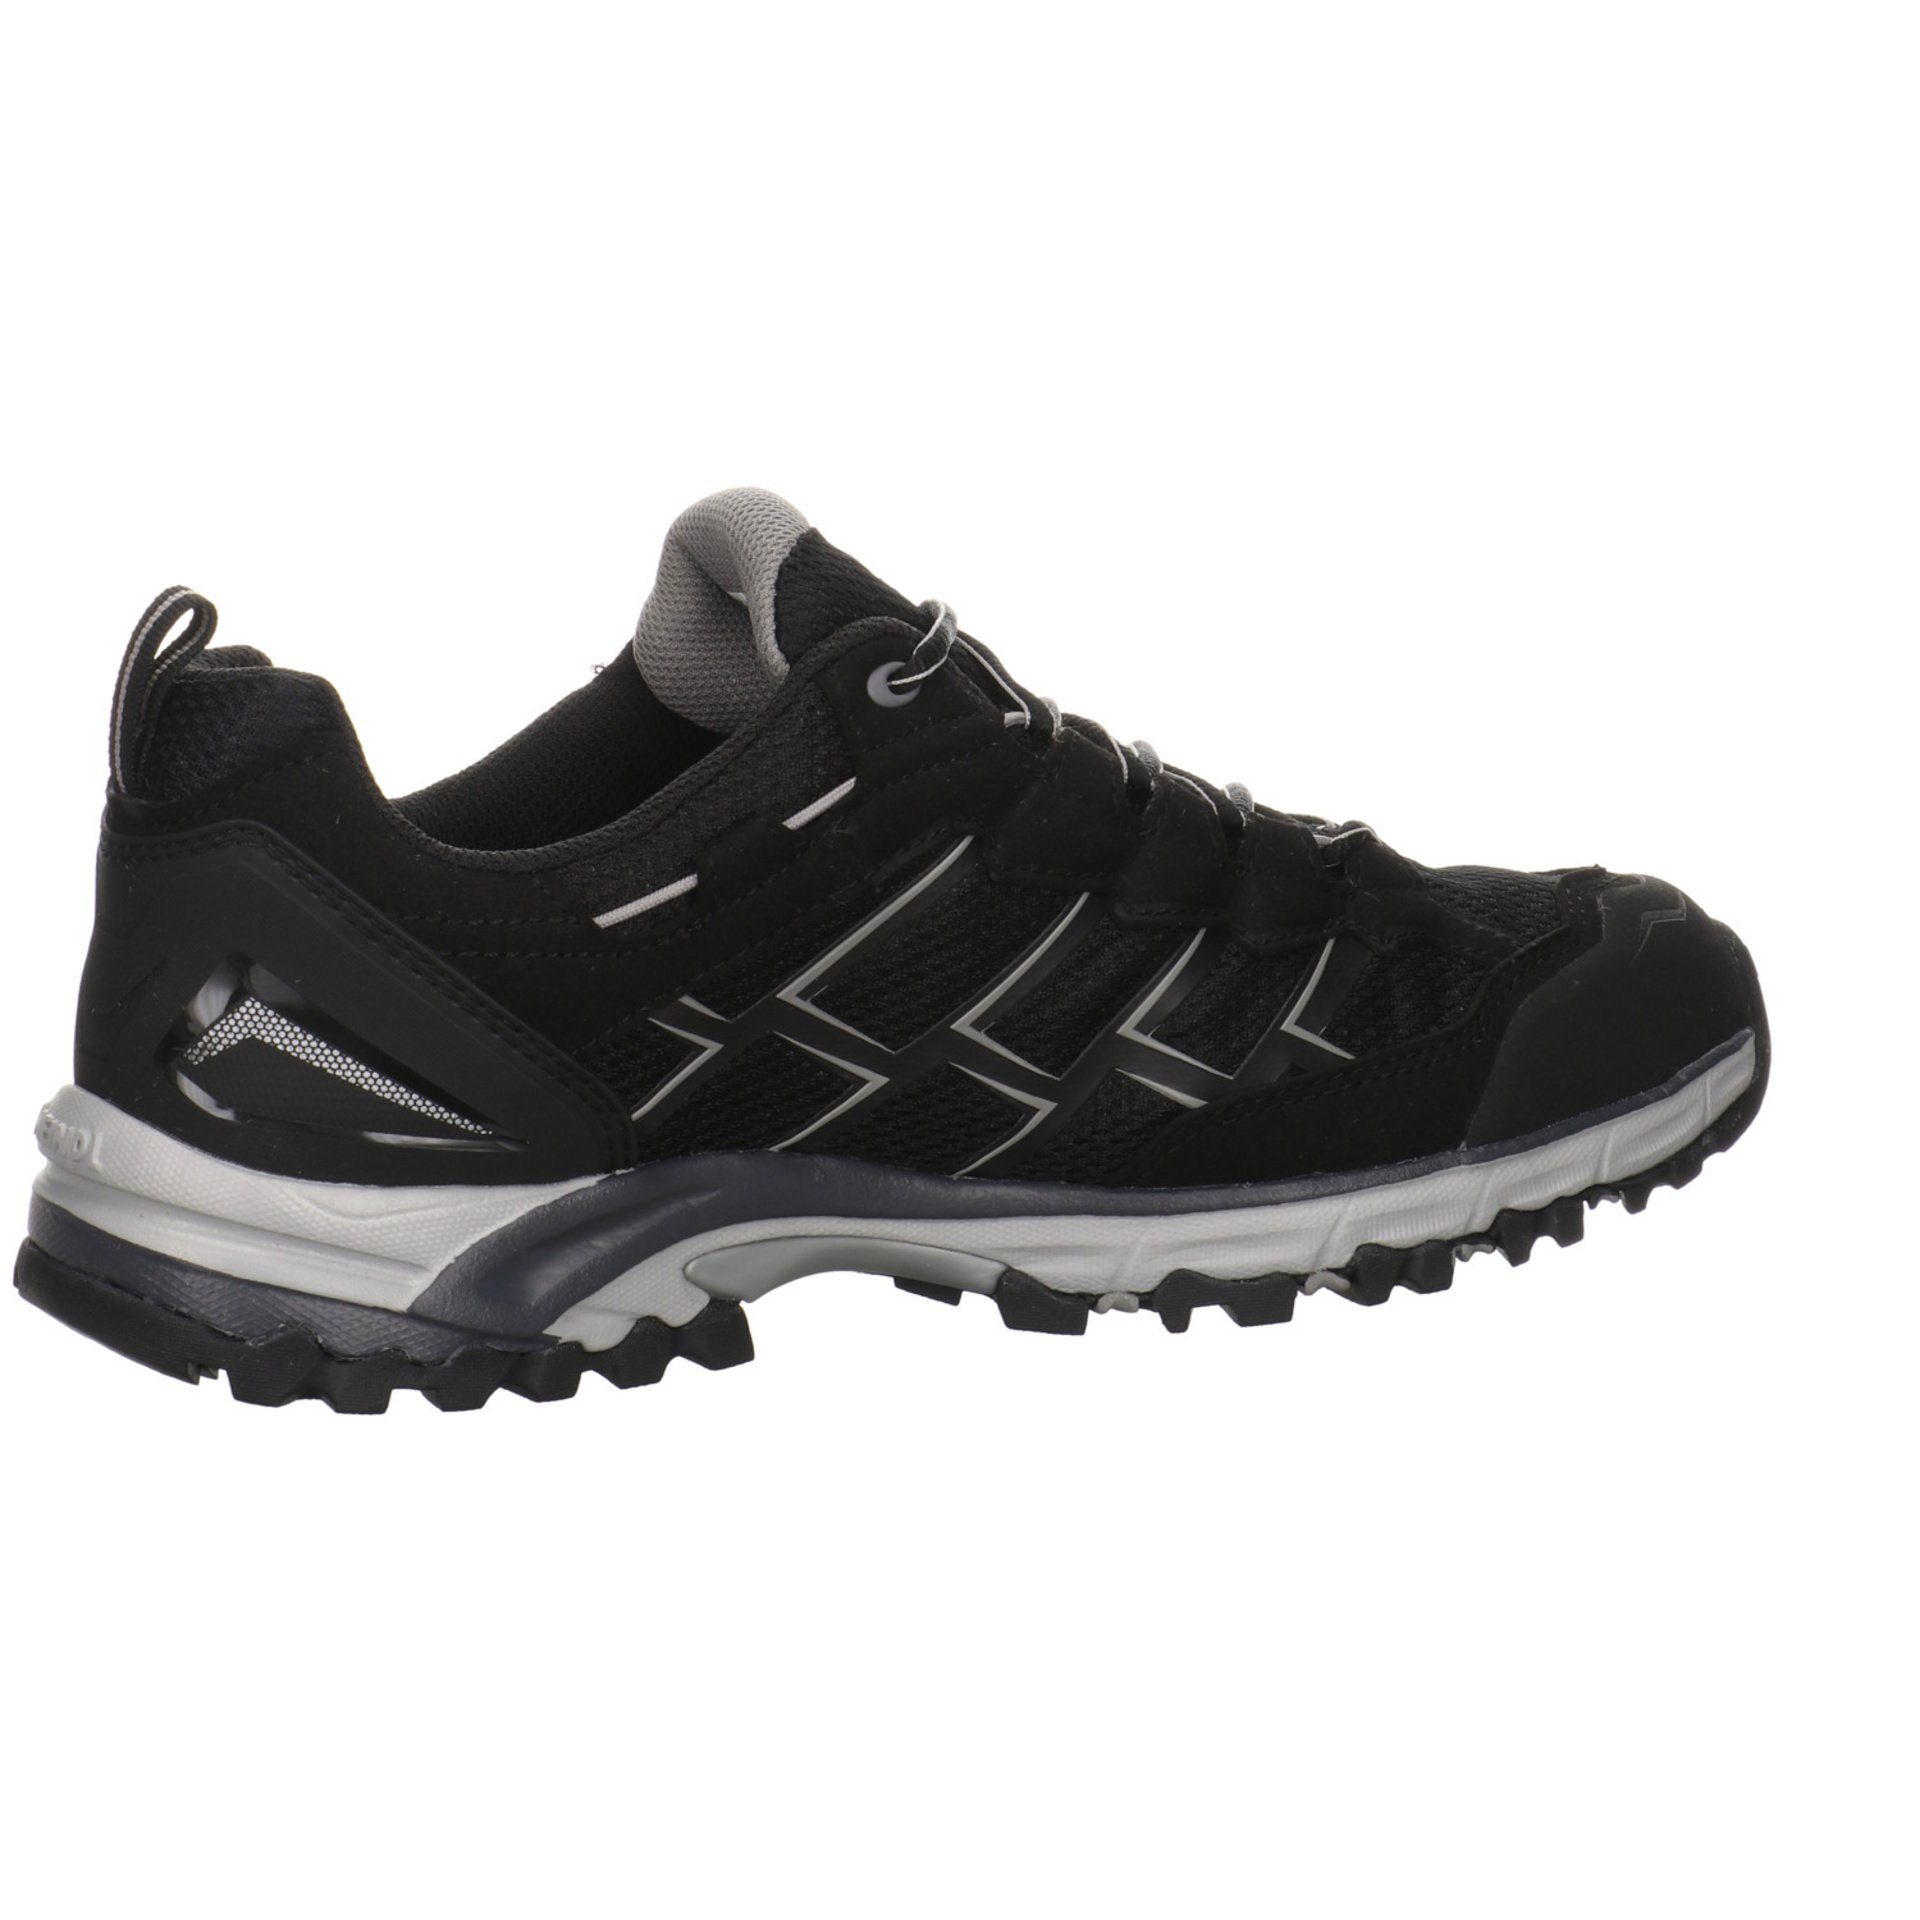 Outdoorschuh black/grey GTX Meindl Outdoorschuh Textil Outdoor Schuhe Caribe Herren